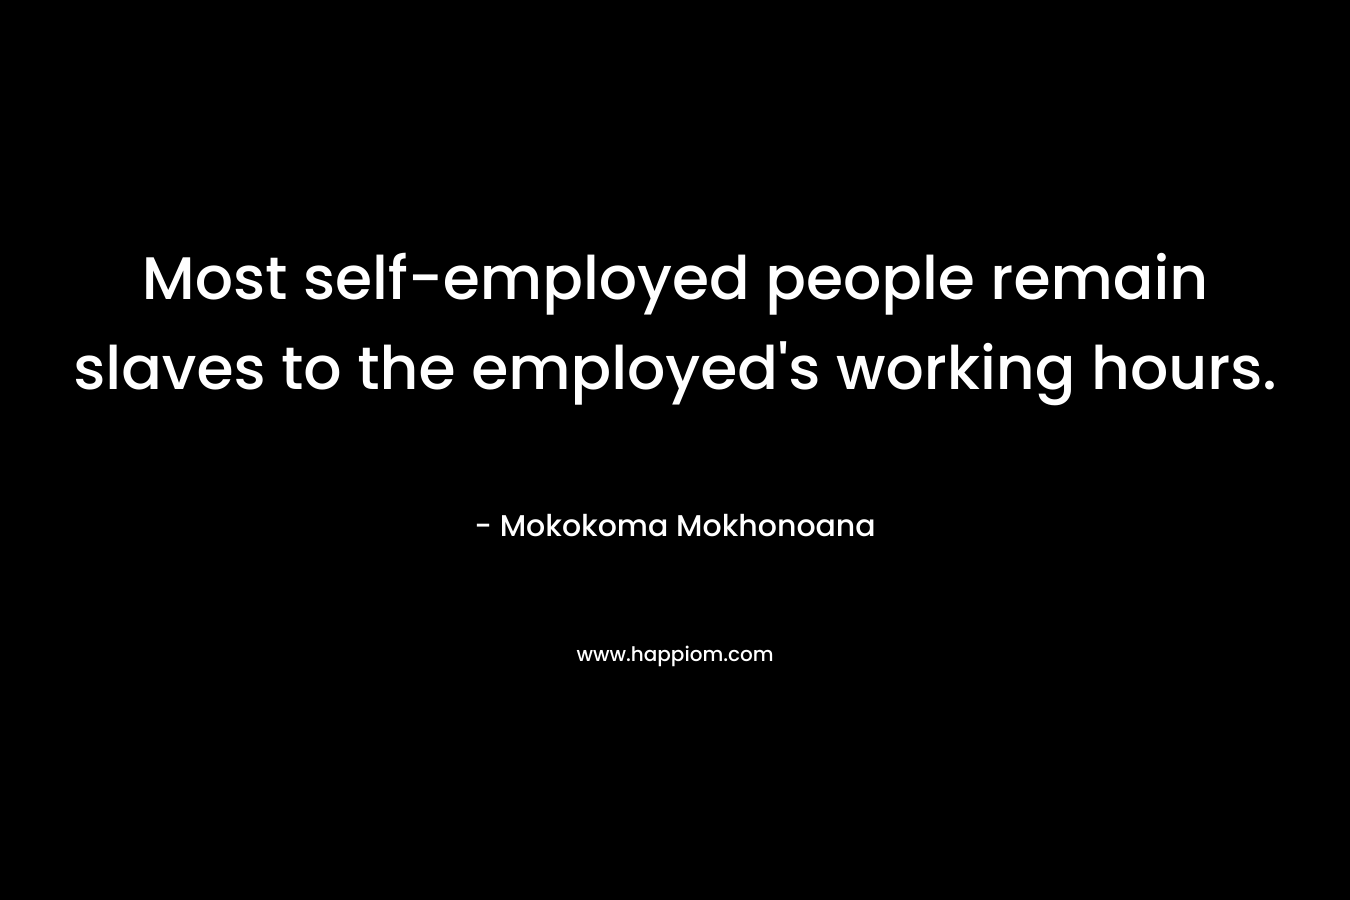 Most self-employed people remain slaves to the employed’s working hours. – Mokokoma Mokhonoana